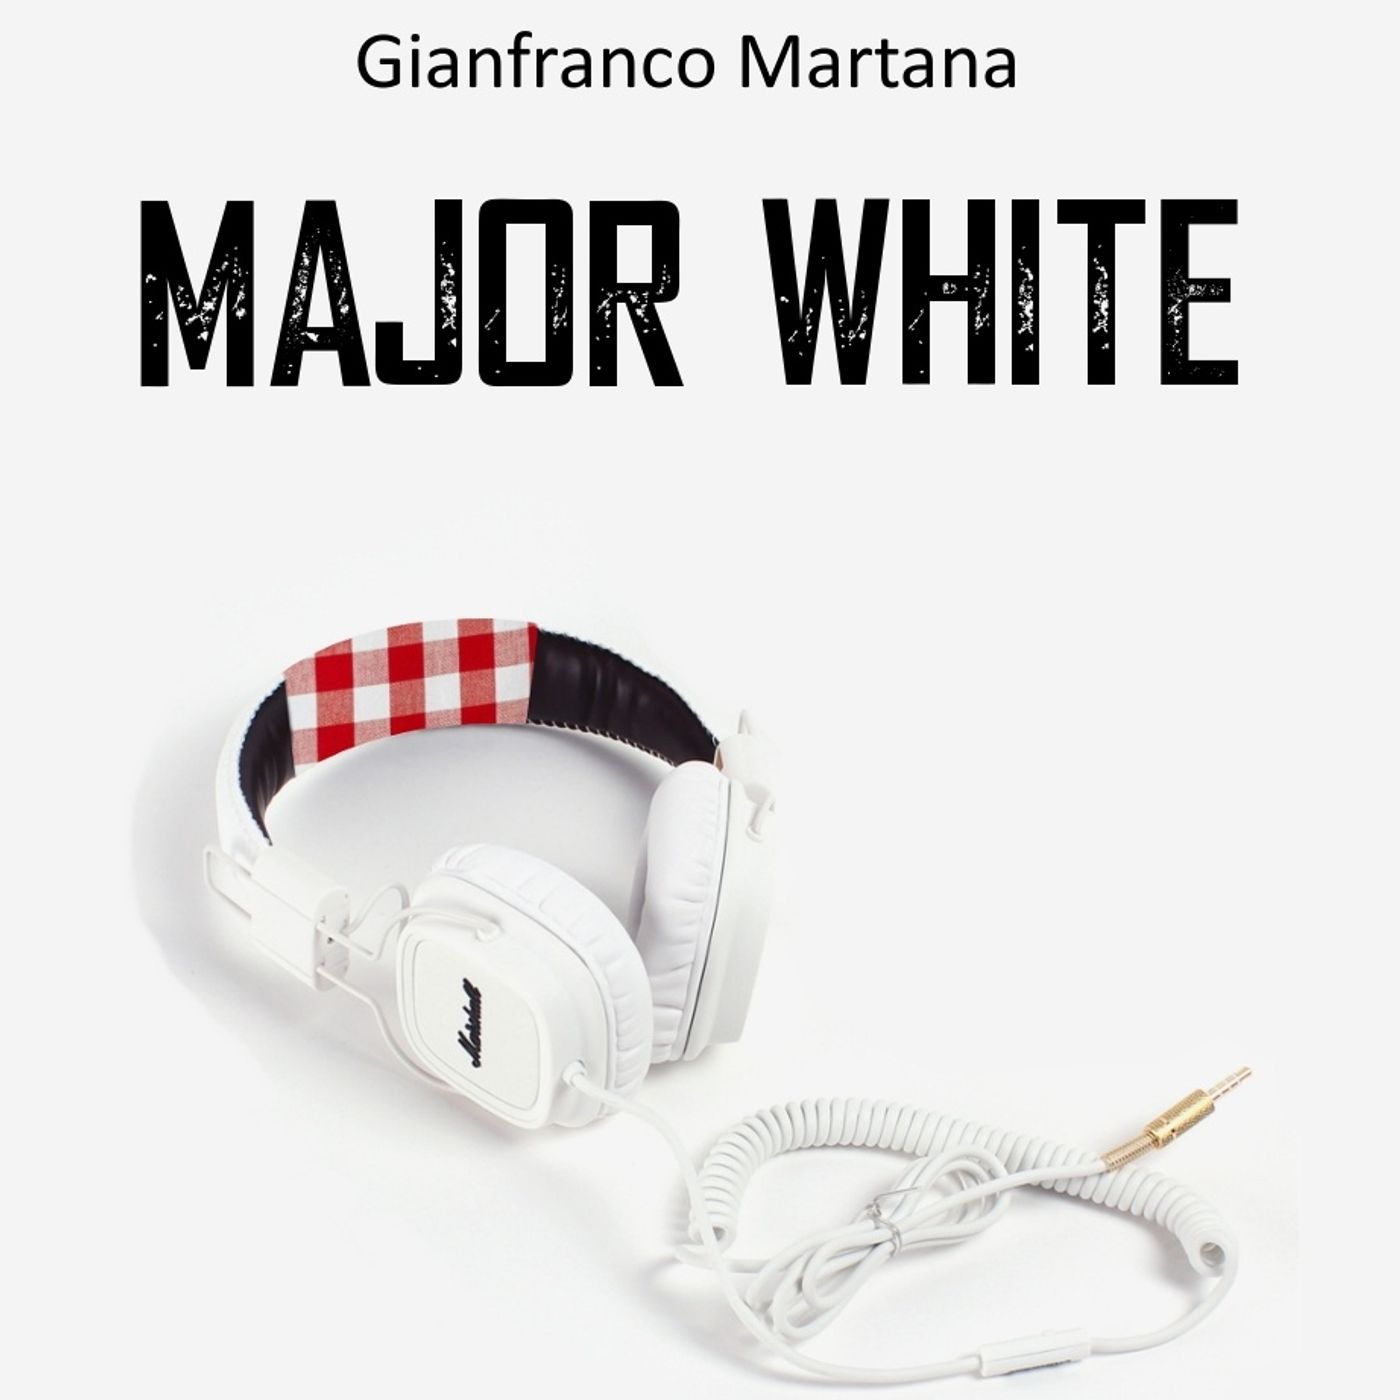 Gianfranco Martana- Major White